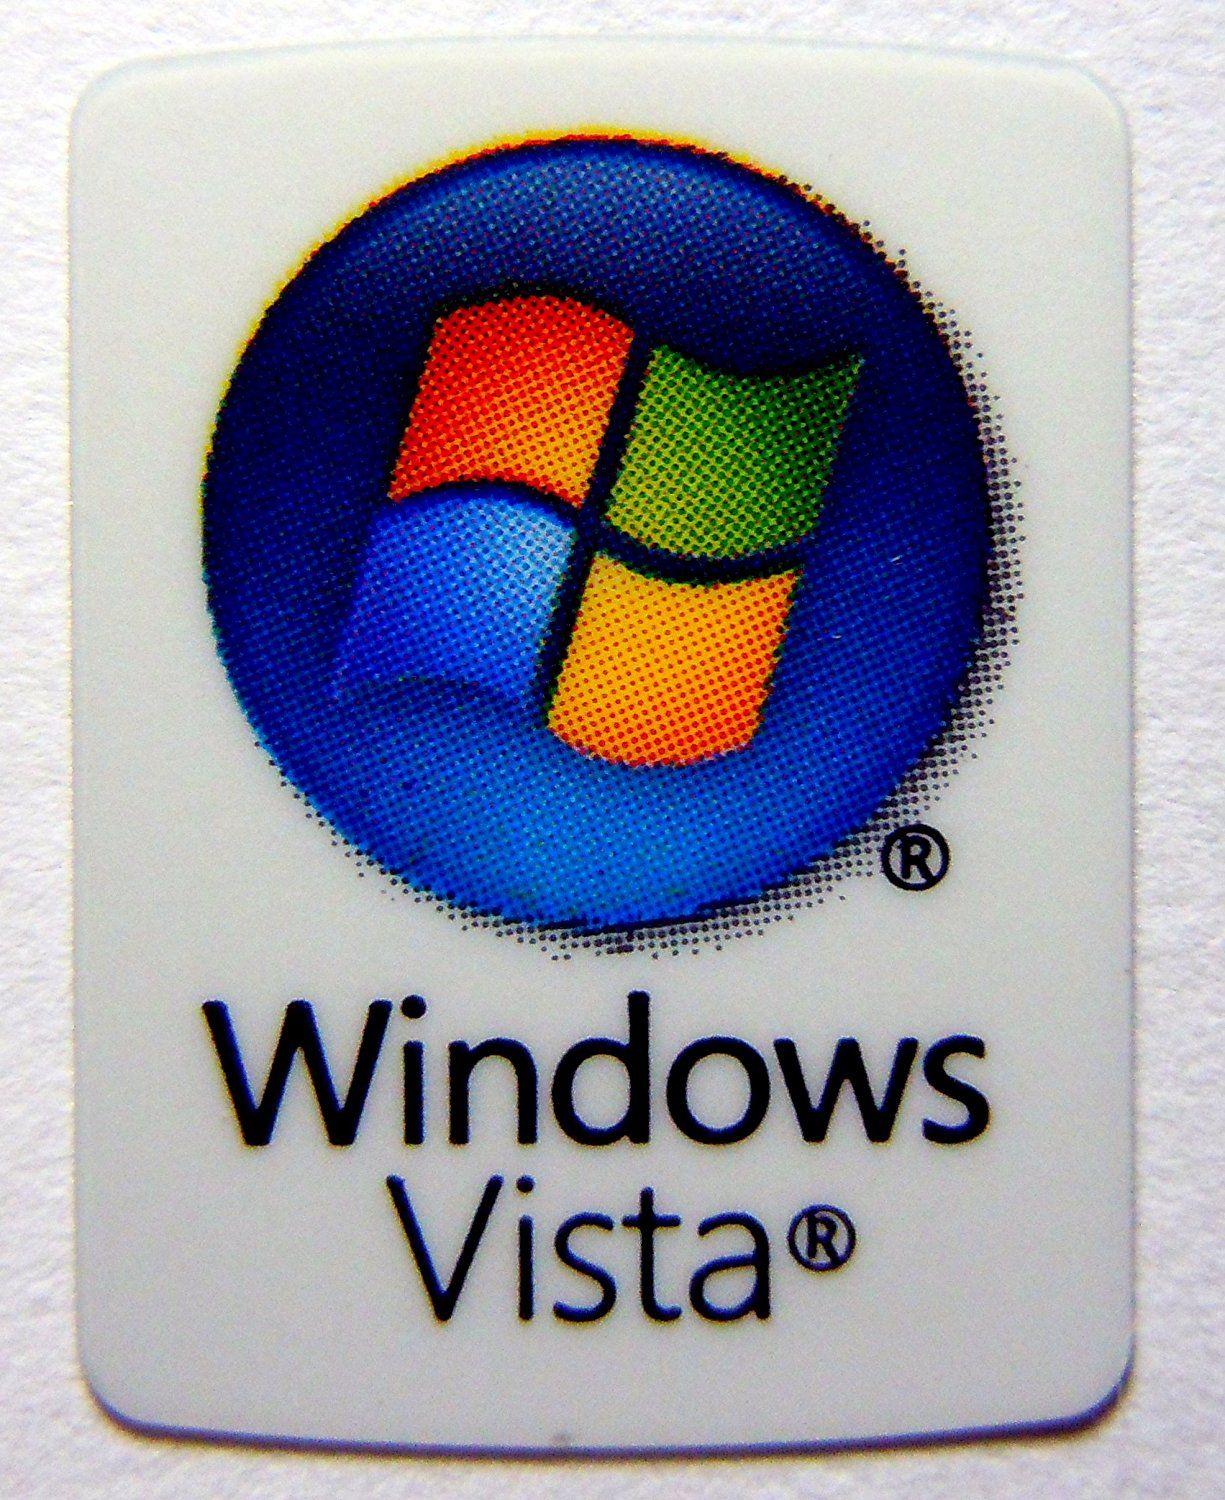 Microsoft Windows Vista Logo - Cheap Microsoft Vista Logo, find Microsoft Vista Logo deals on line ...